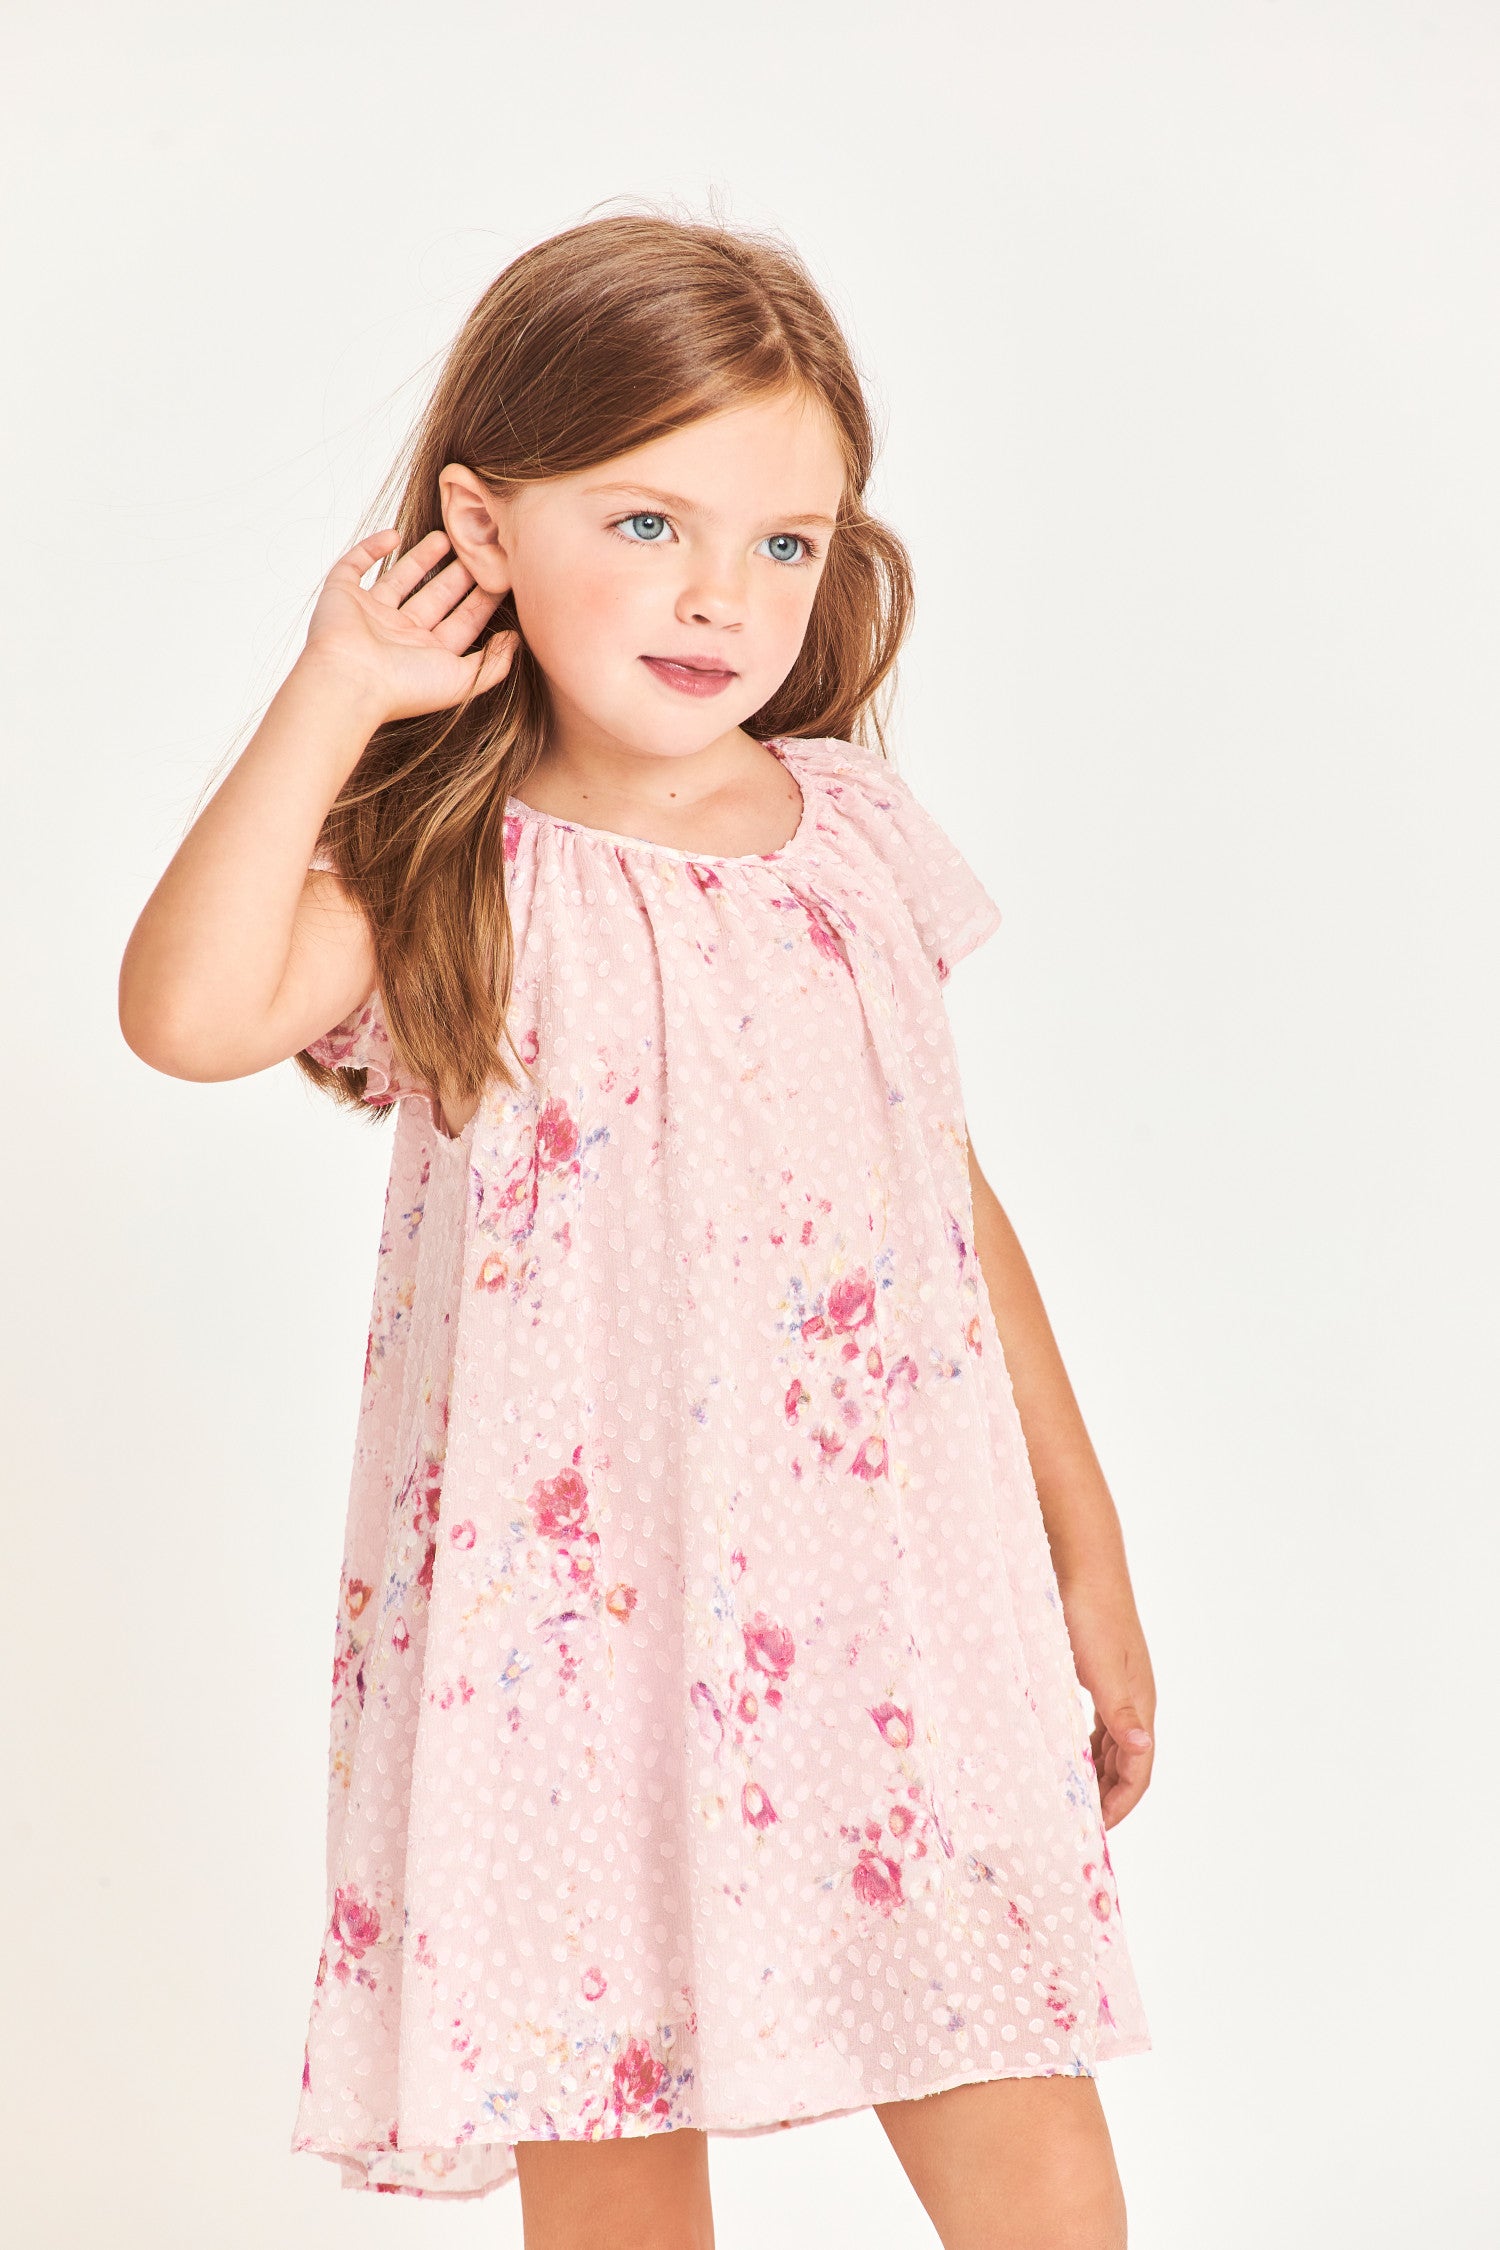 Model wearing kids pink mini dress